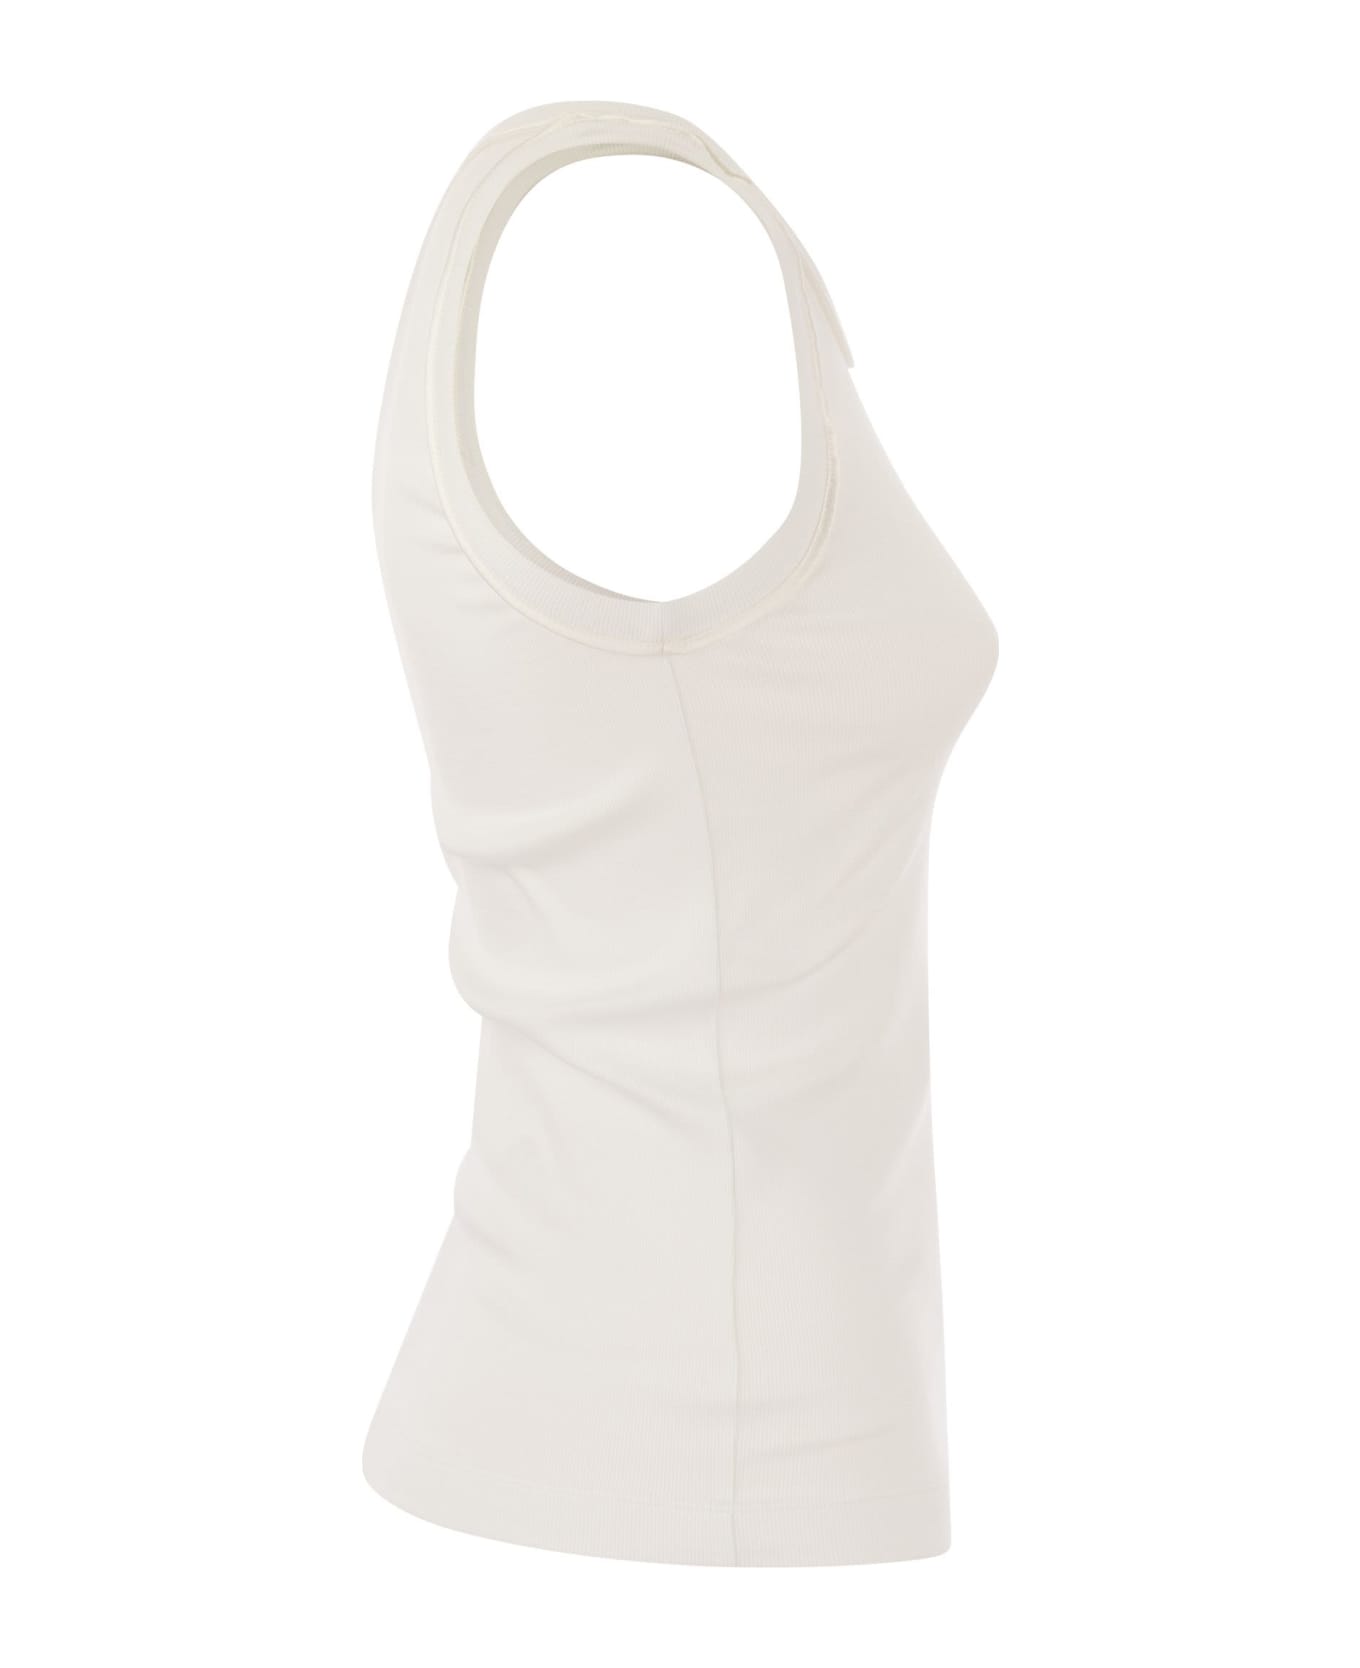 Brunello Cucinelli Stretch Cotton Rib Jersey Top With Satin Trims - White